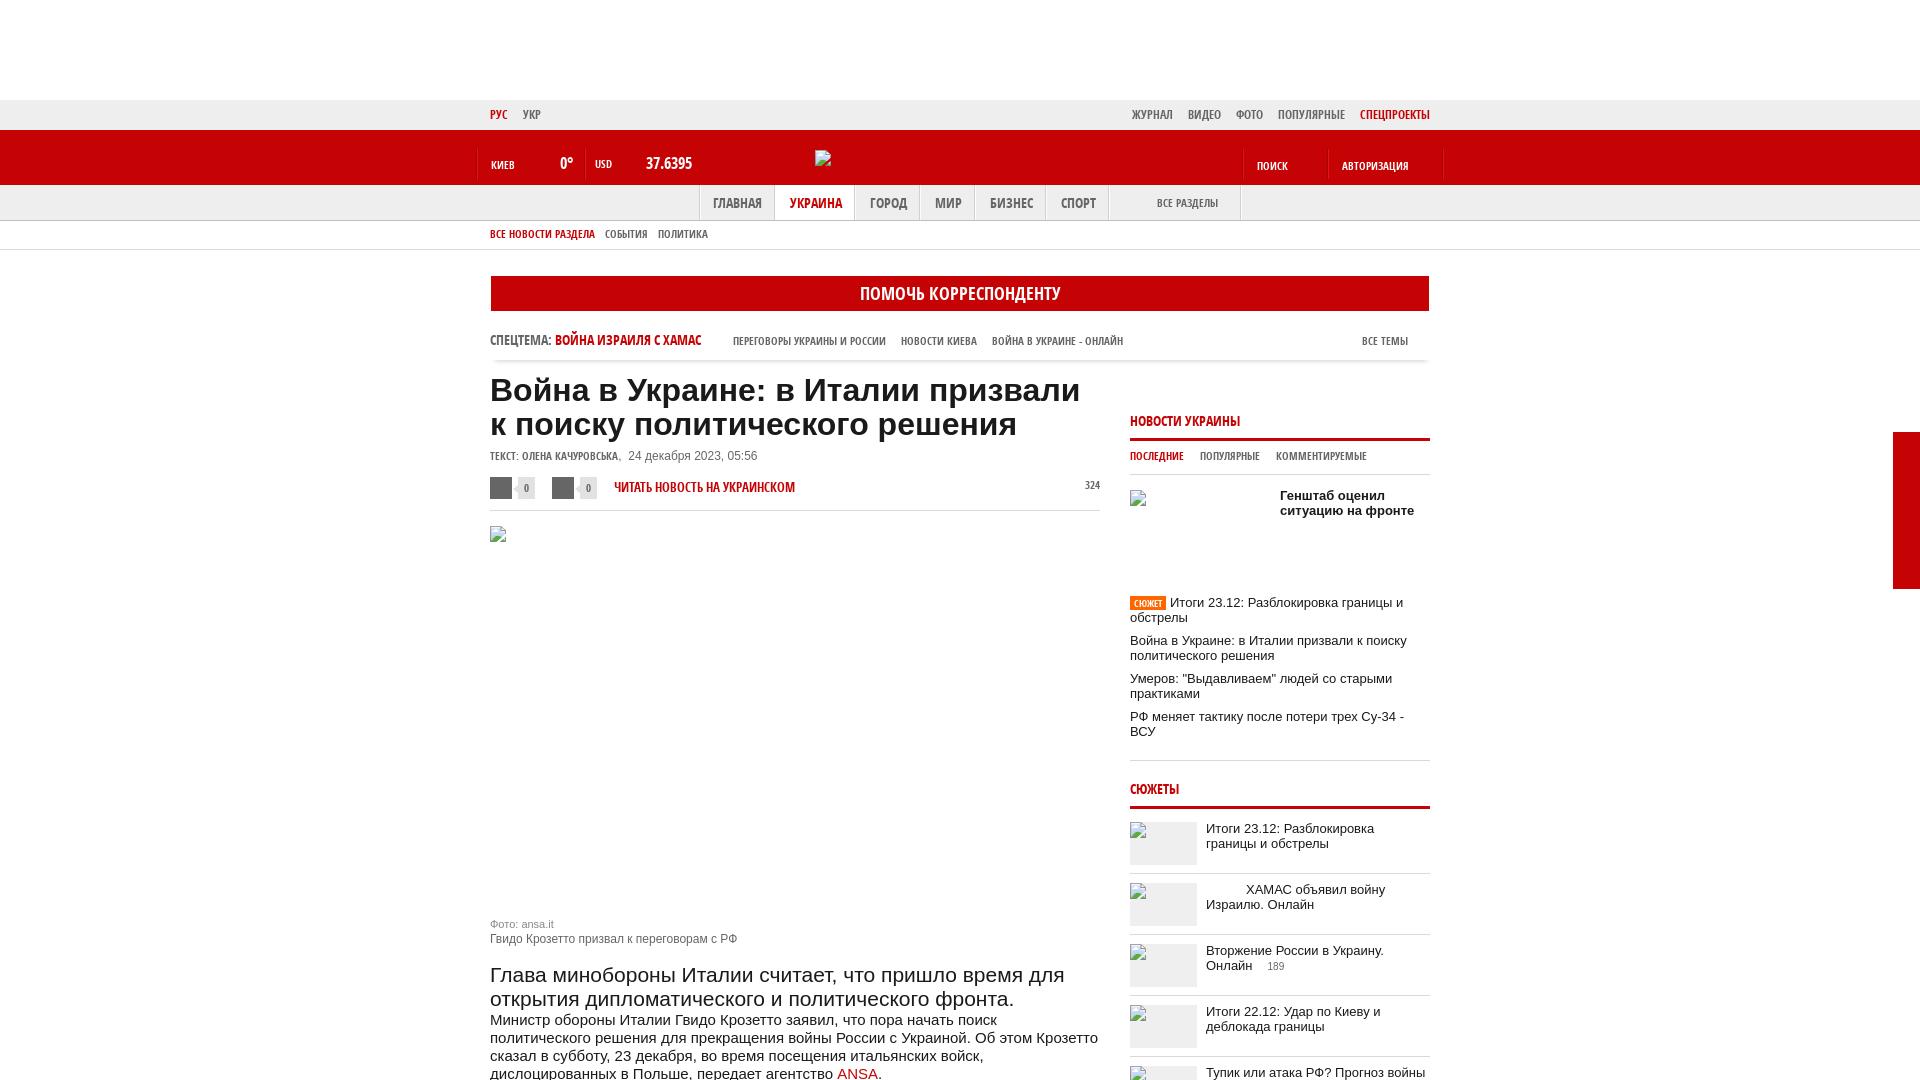 Guerra in Ucraina: l’Italia chiede una soluzione politica |  Robot di notizie